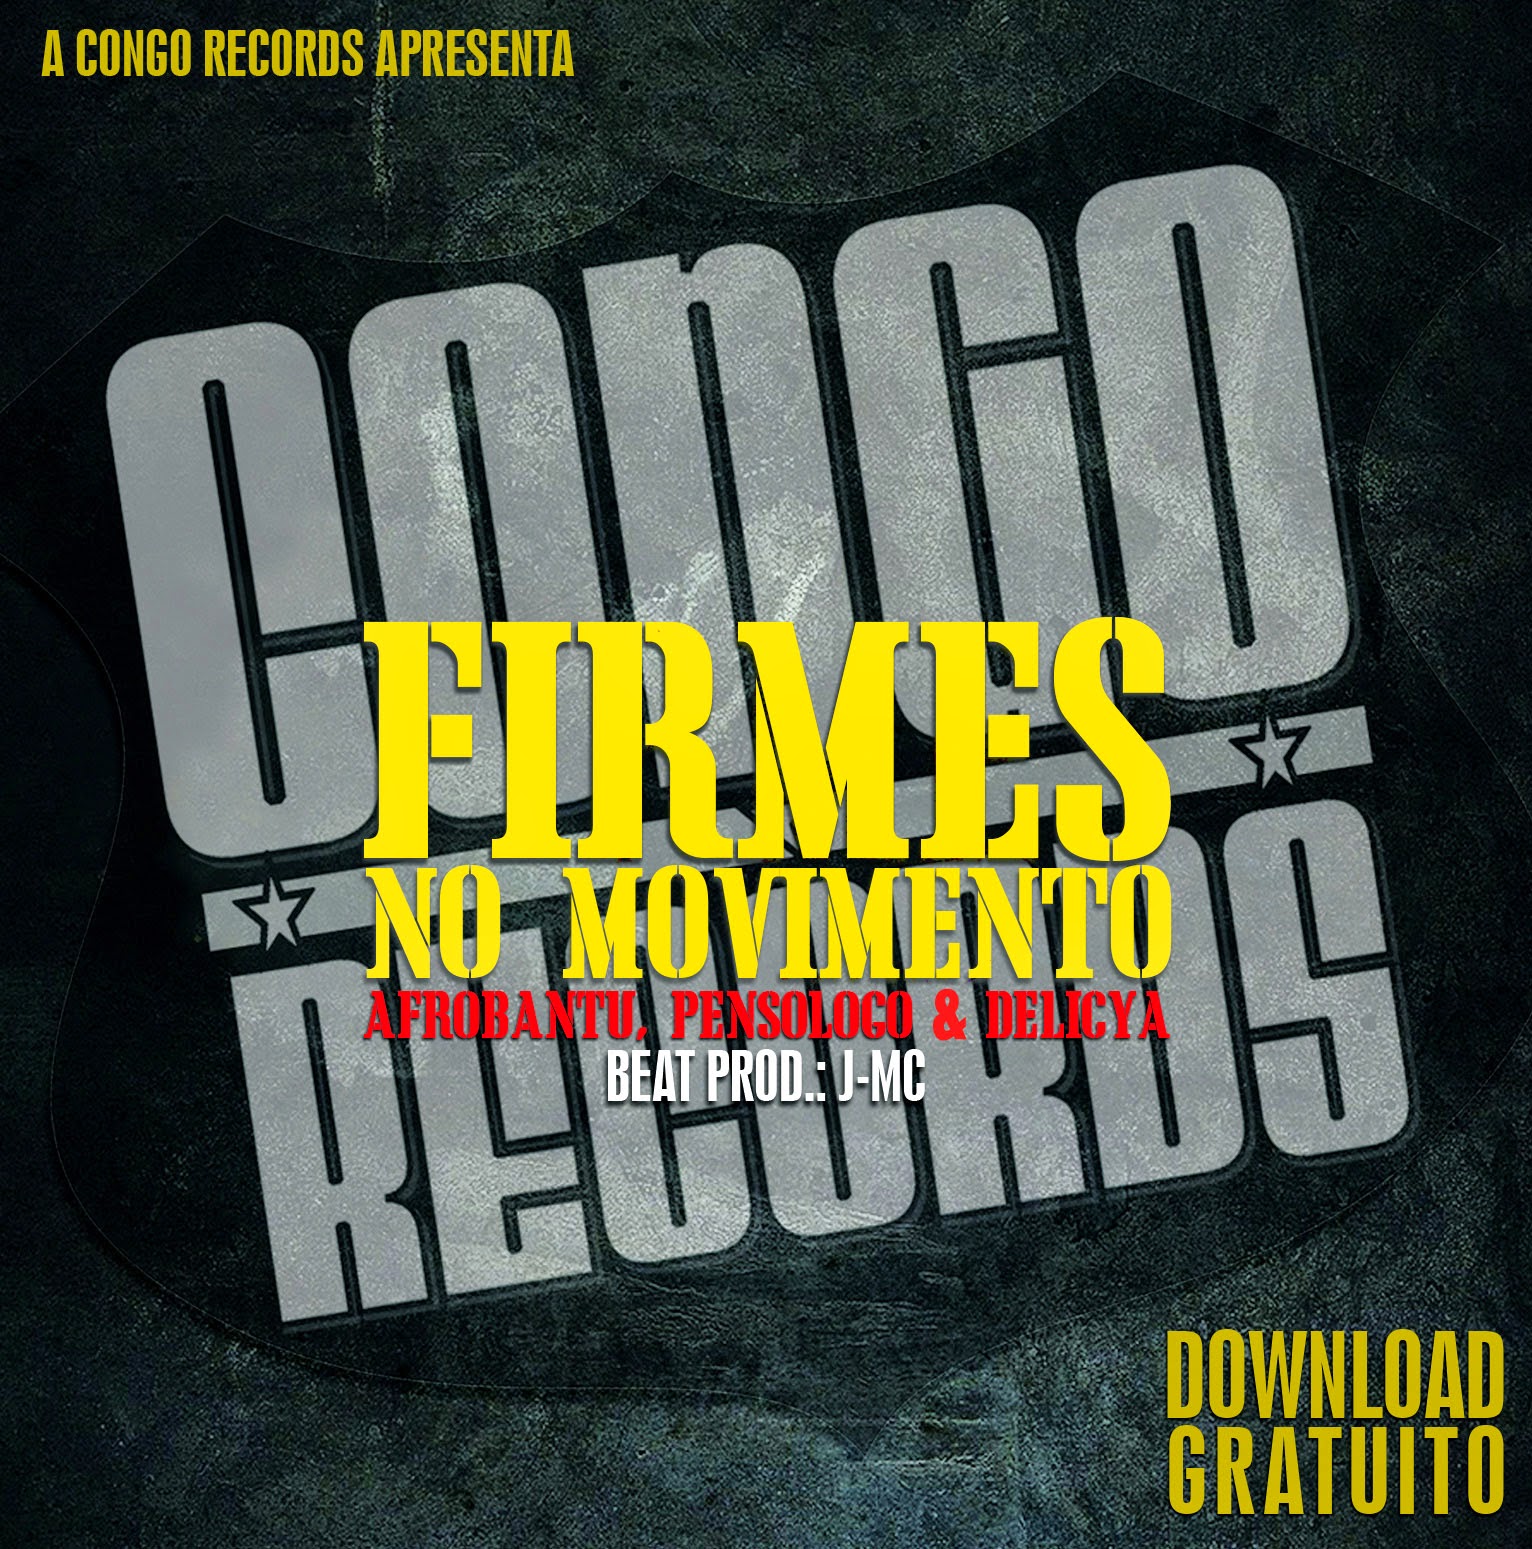 Congo Records – “Firmes No Movimento” (Prod. J-MC) ||Download